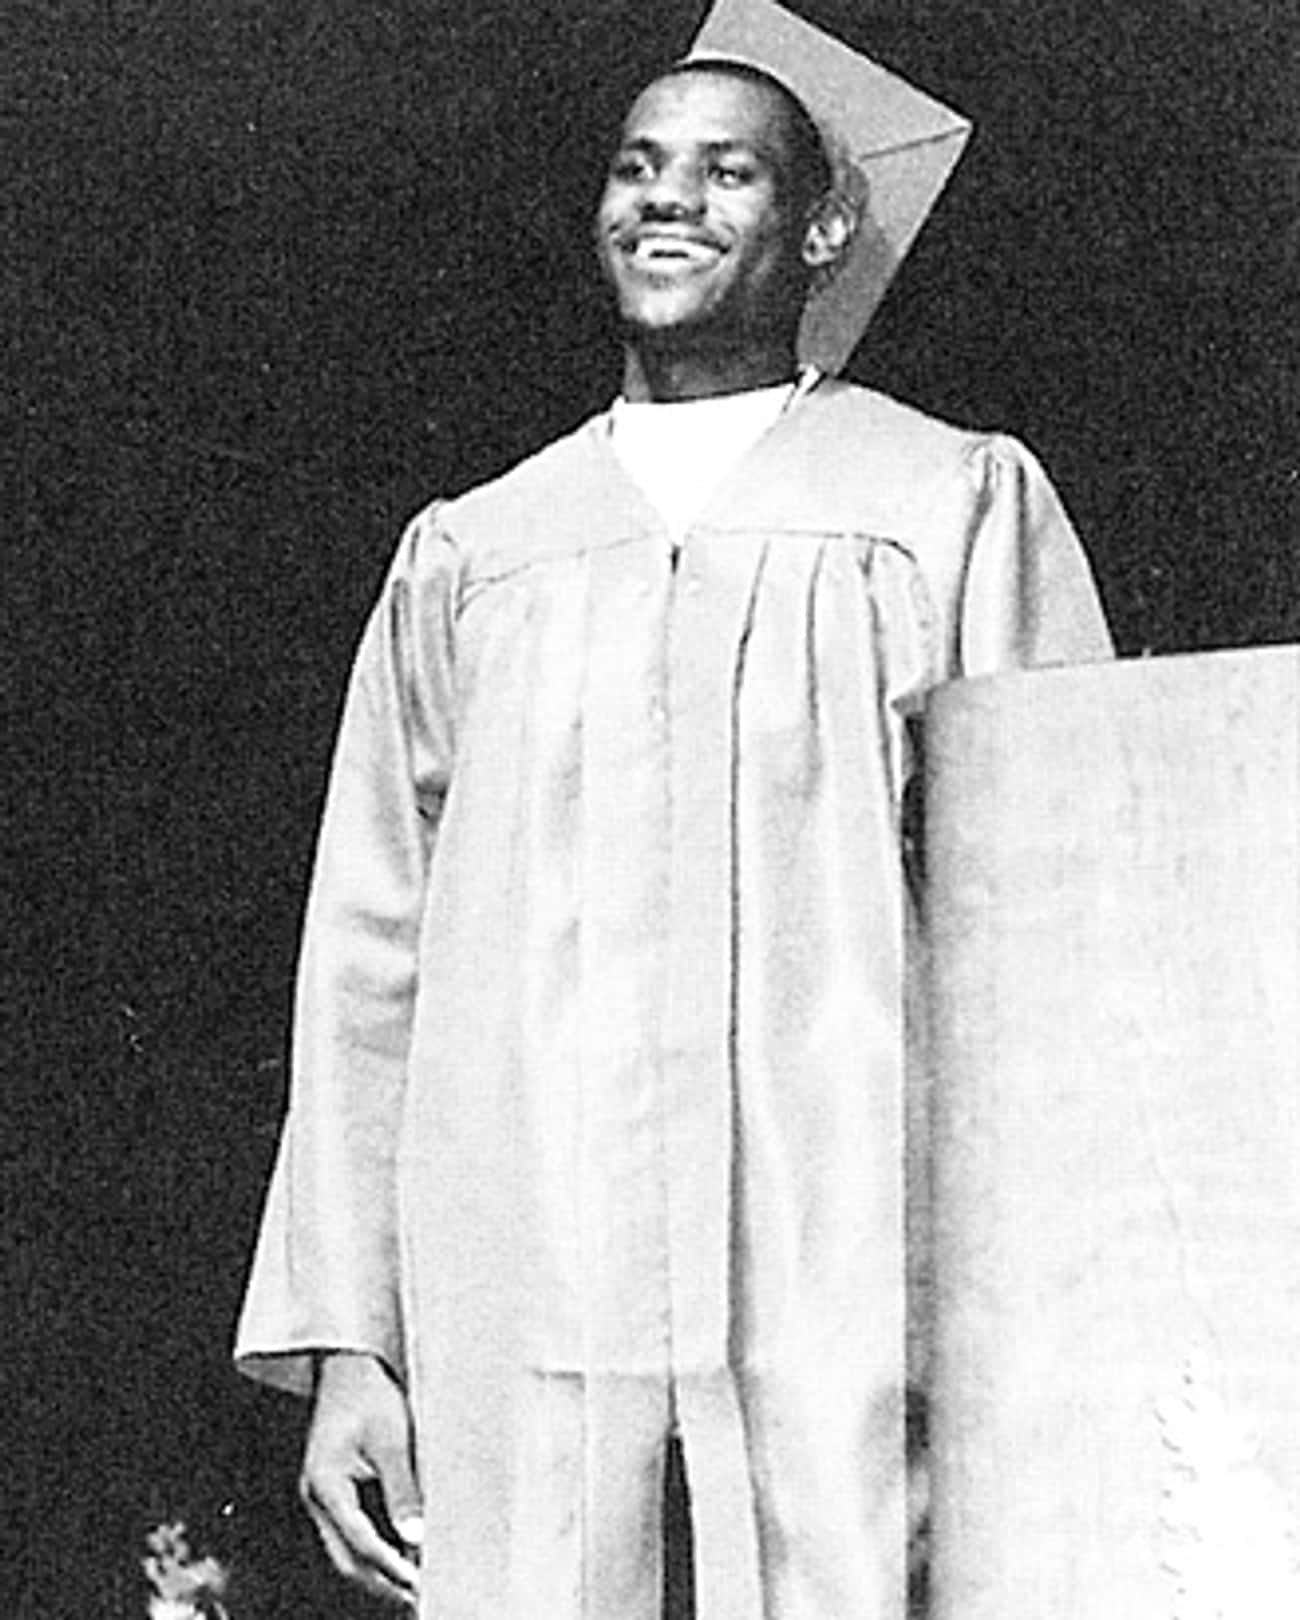 Young LeBron James at High School Graduation